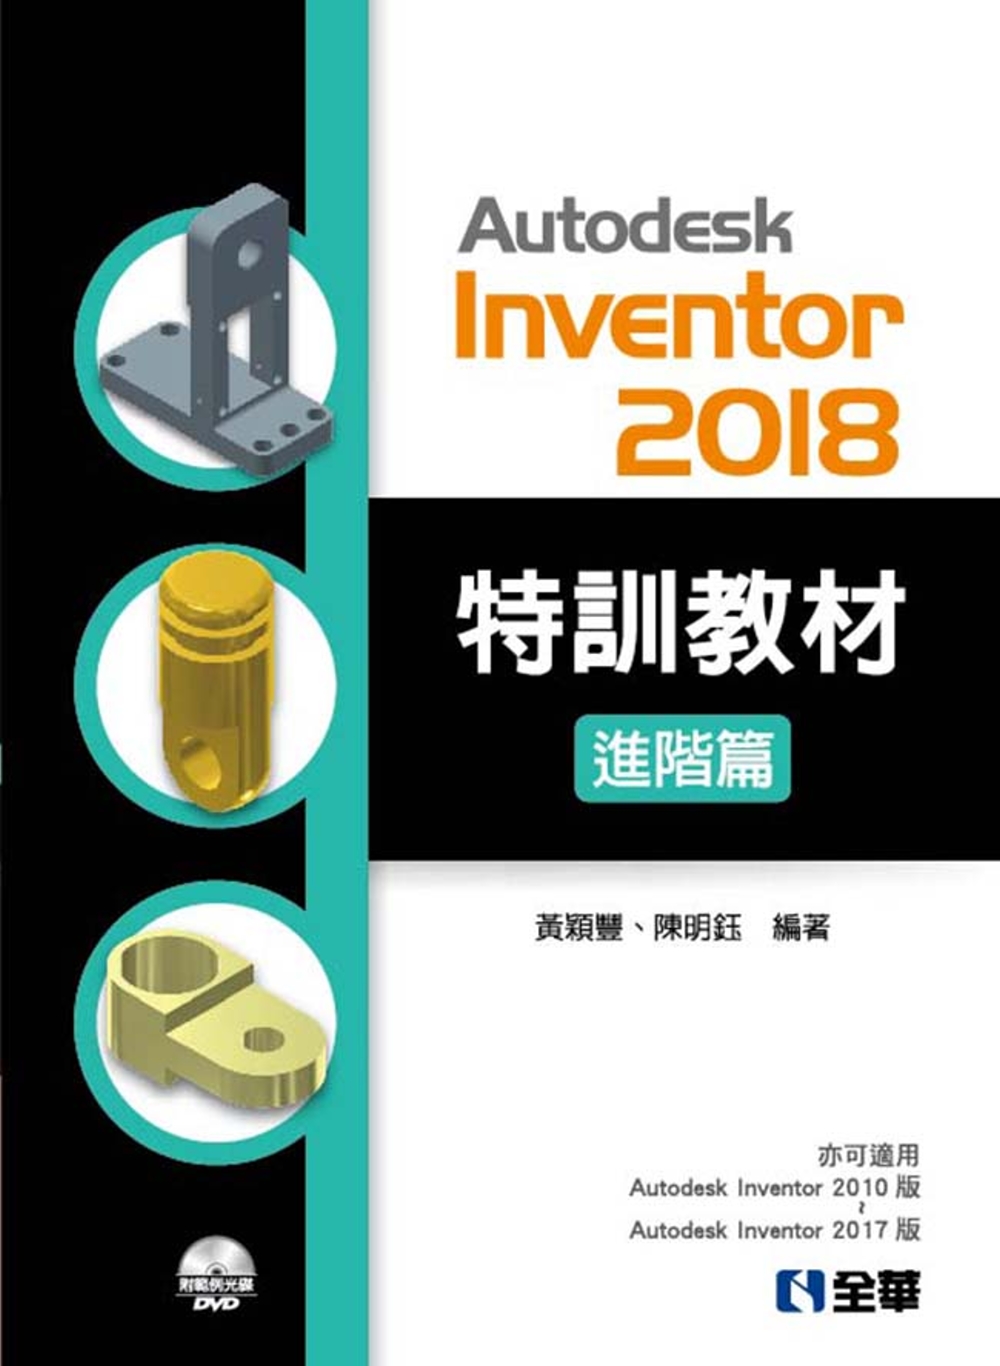 Autodesk Inventor 2018 特訓教材進階篇...